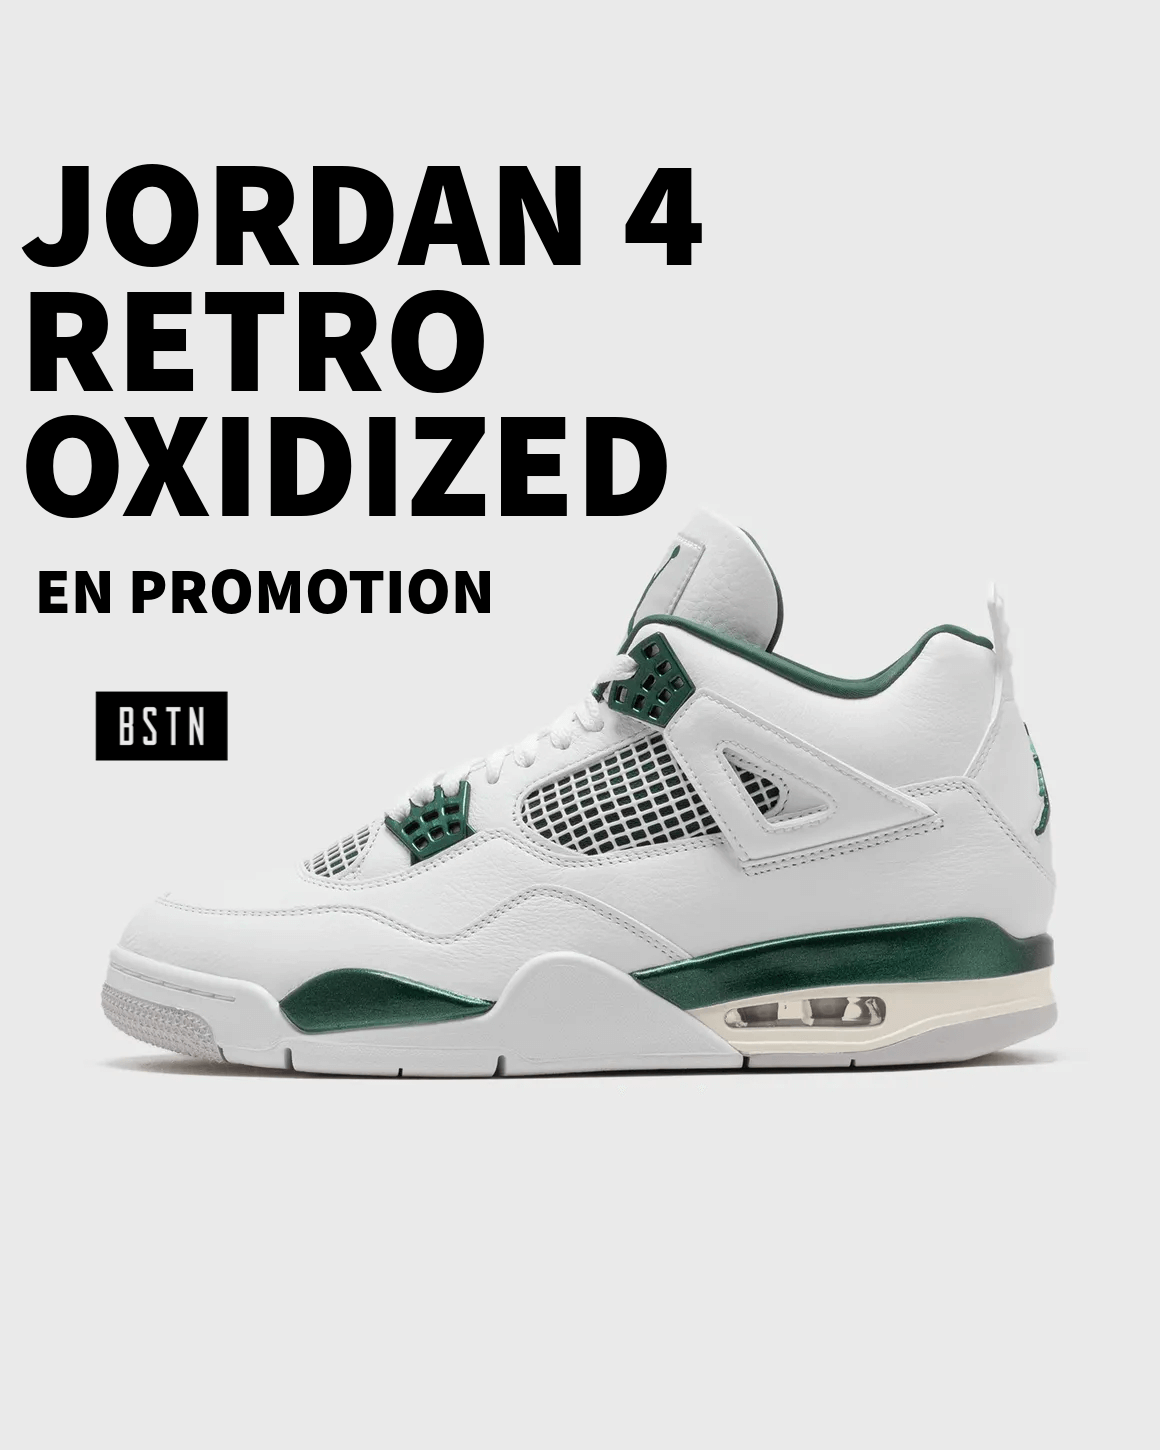 Jordan 4 Retro Oxidized Green en promotion